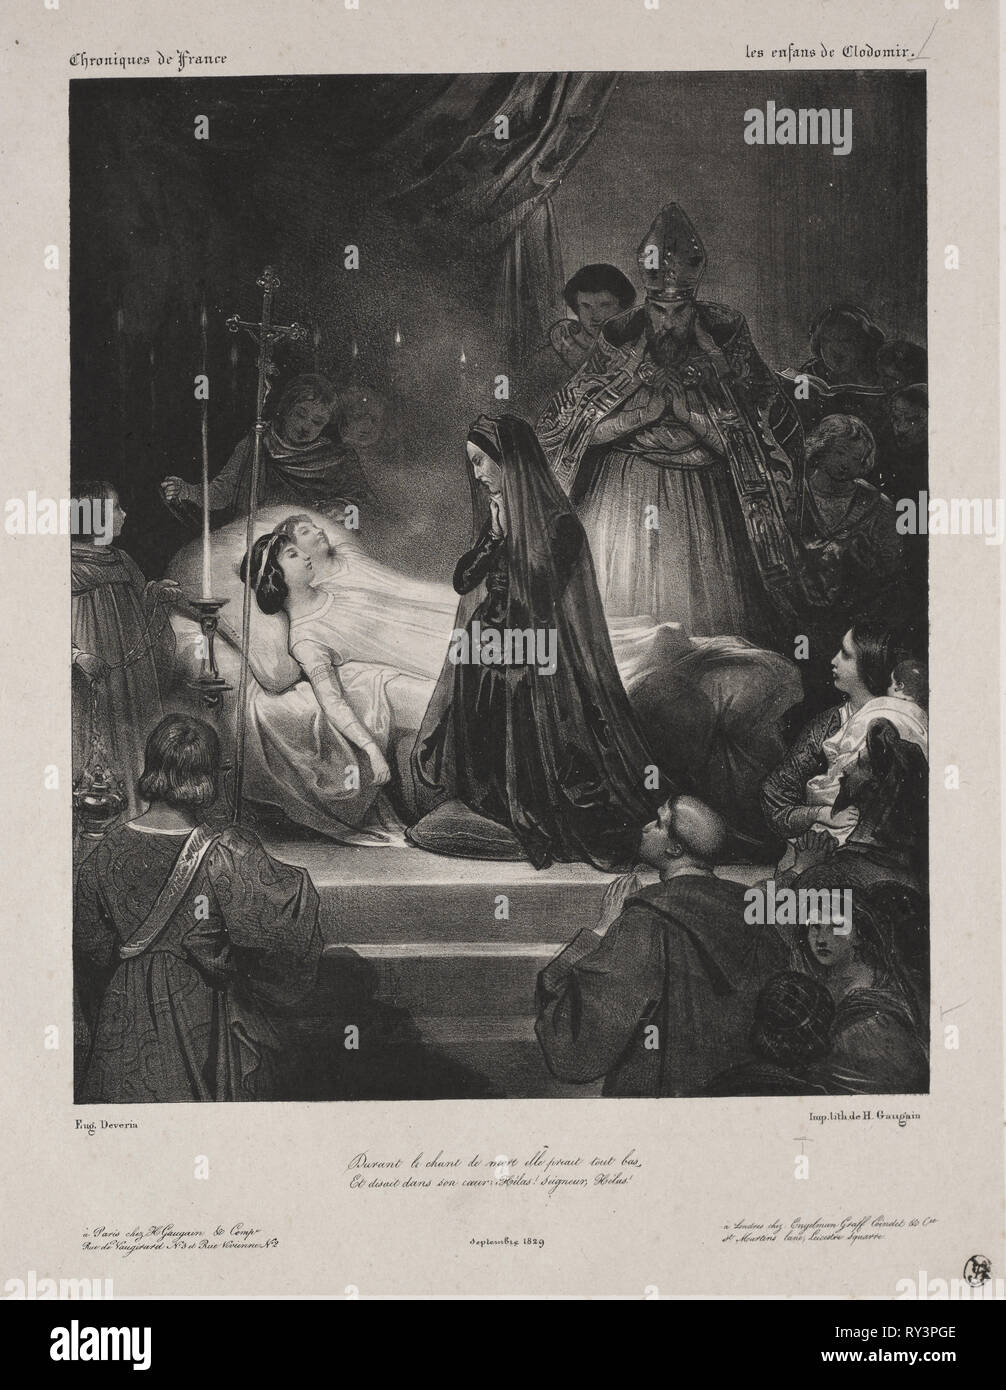 Cronache di Francia: figli di Clodomir, 1829. Eugène François Marie Joseph Devéria (Francese, 1805-1865). Litografia Foto Stock